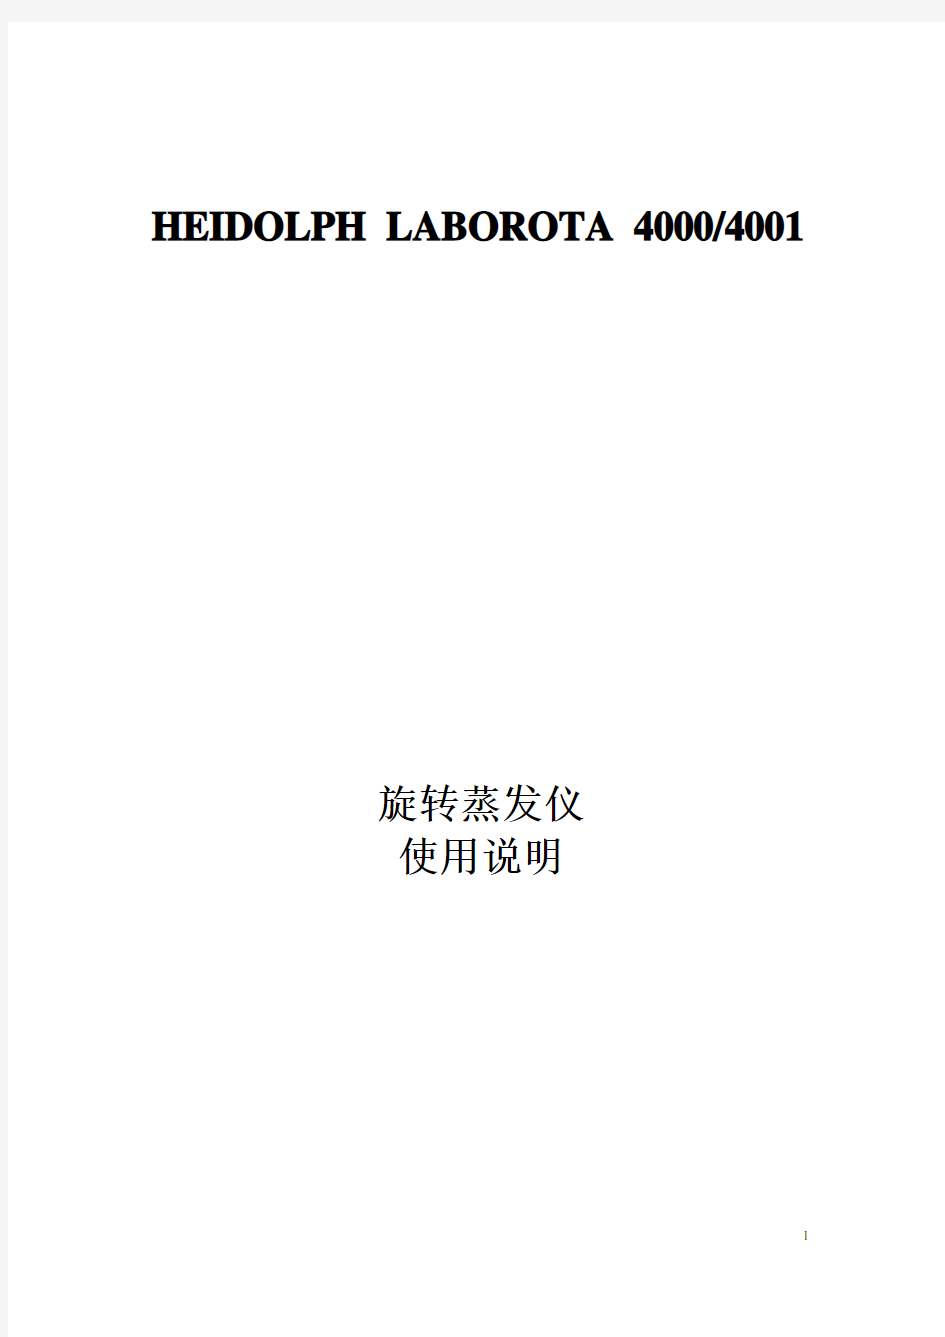 HEIDOLPH-4000-4001旋转蒸发仪使用说明书